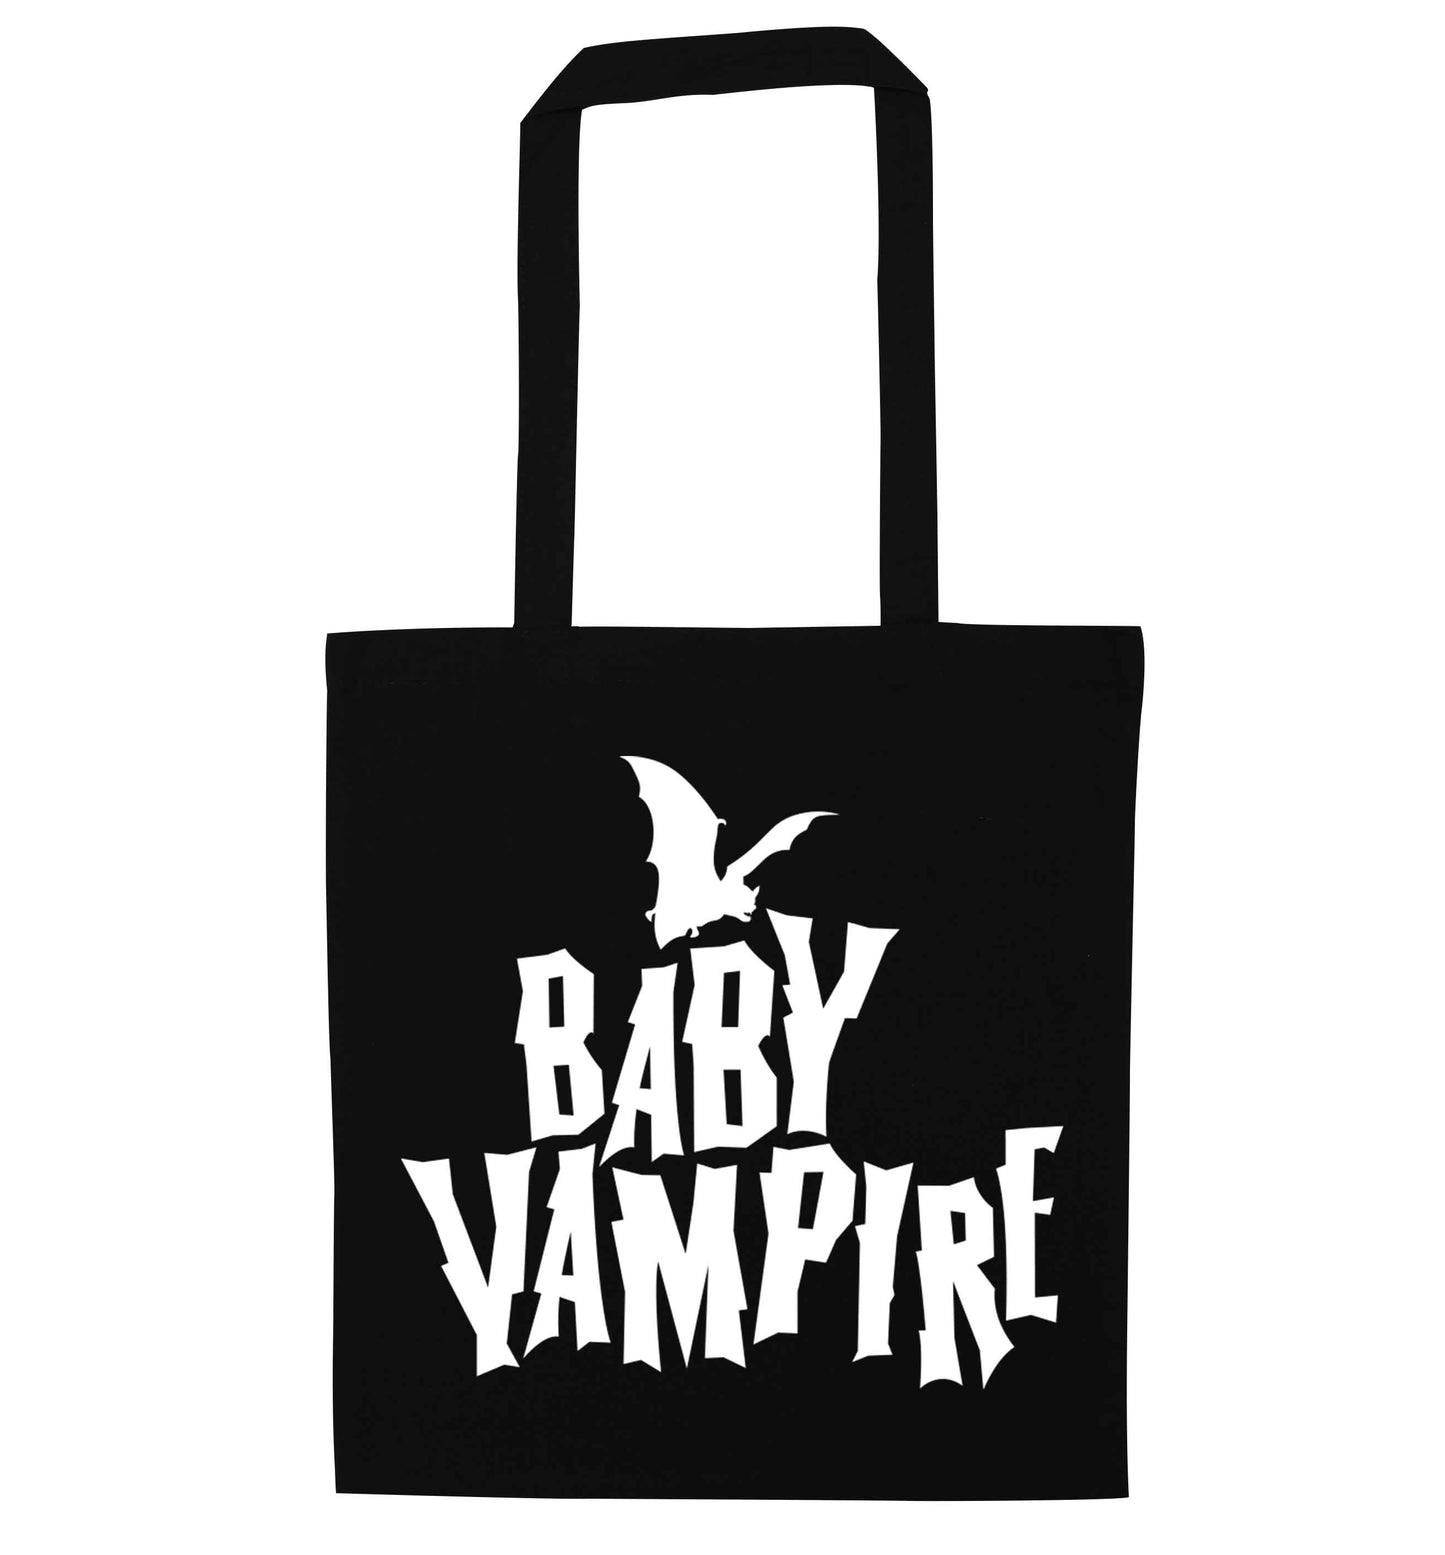 Baby vampire black tote bag